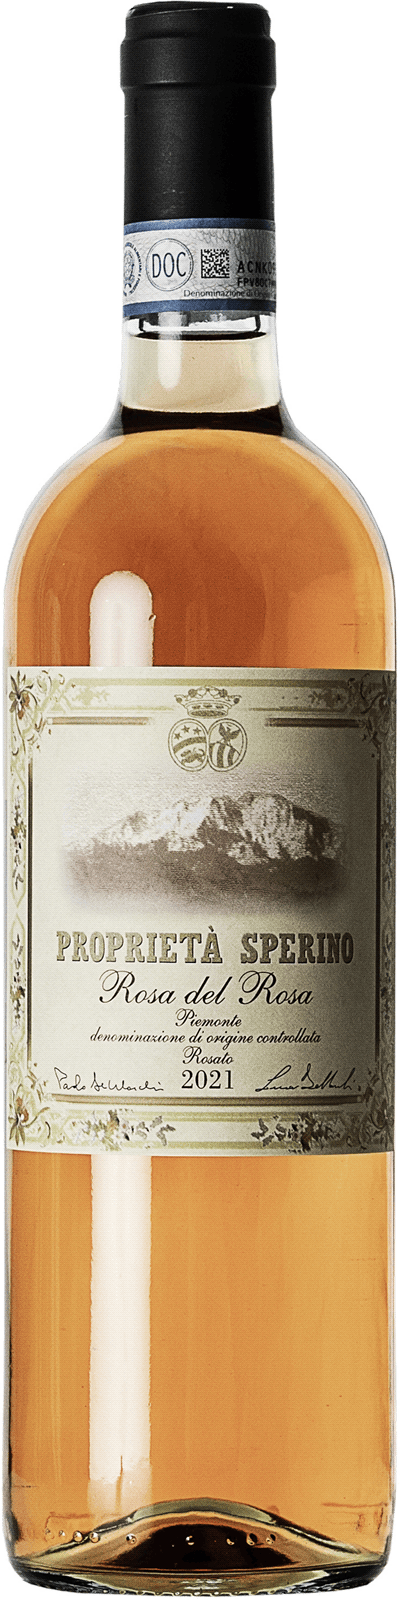 Produktbild för Proprietà Sperino